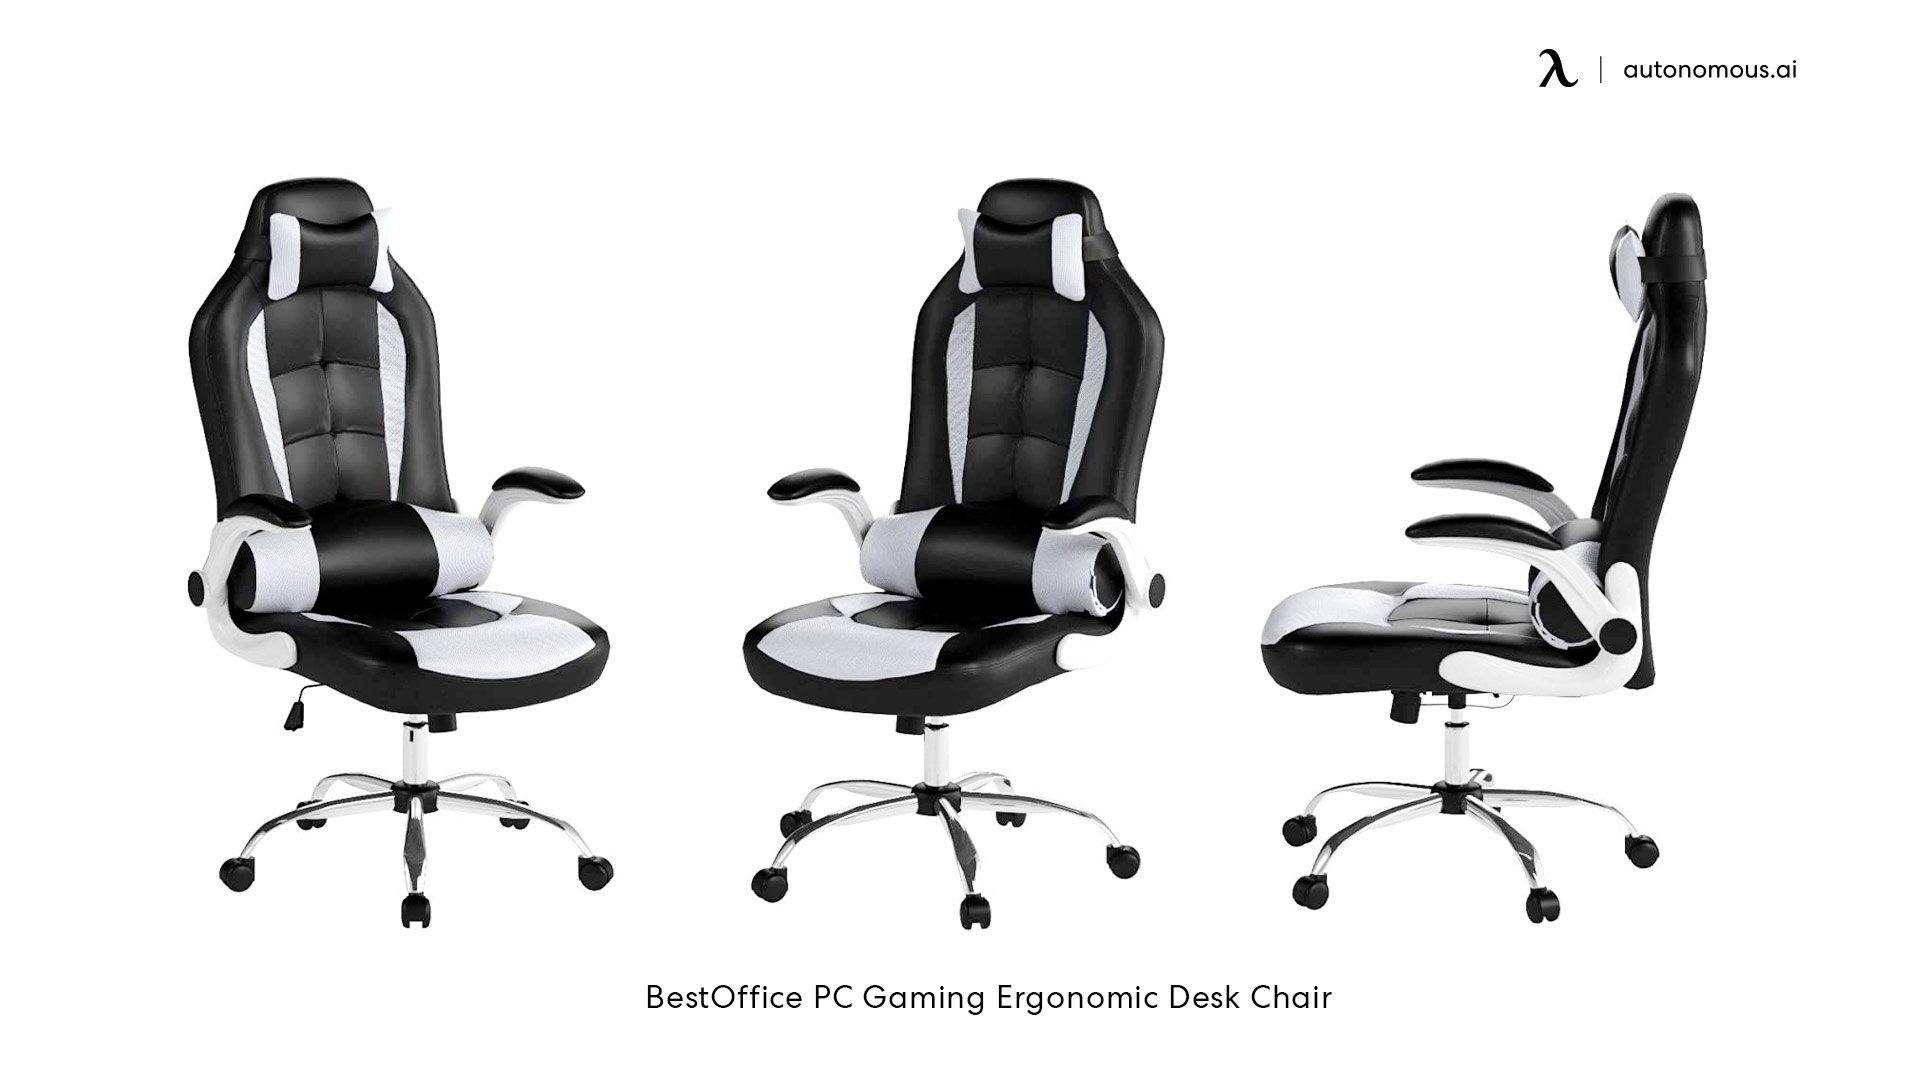 BestOffice PC Gaming Ergonomic Desk Chair